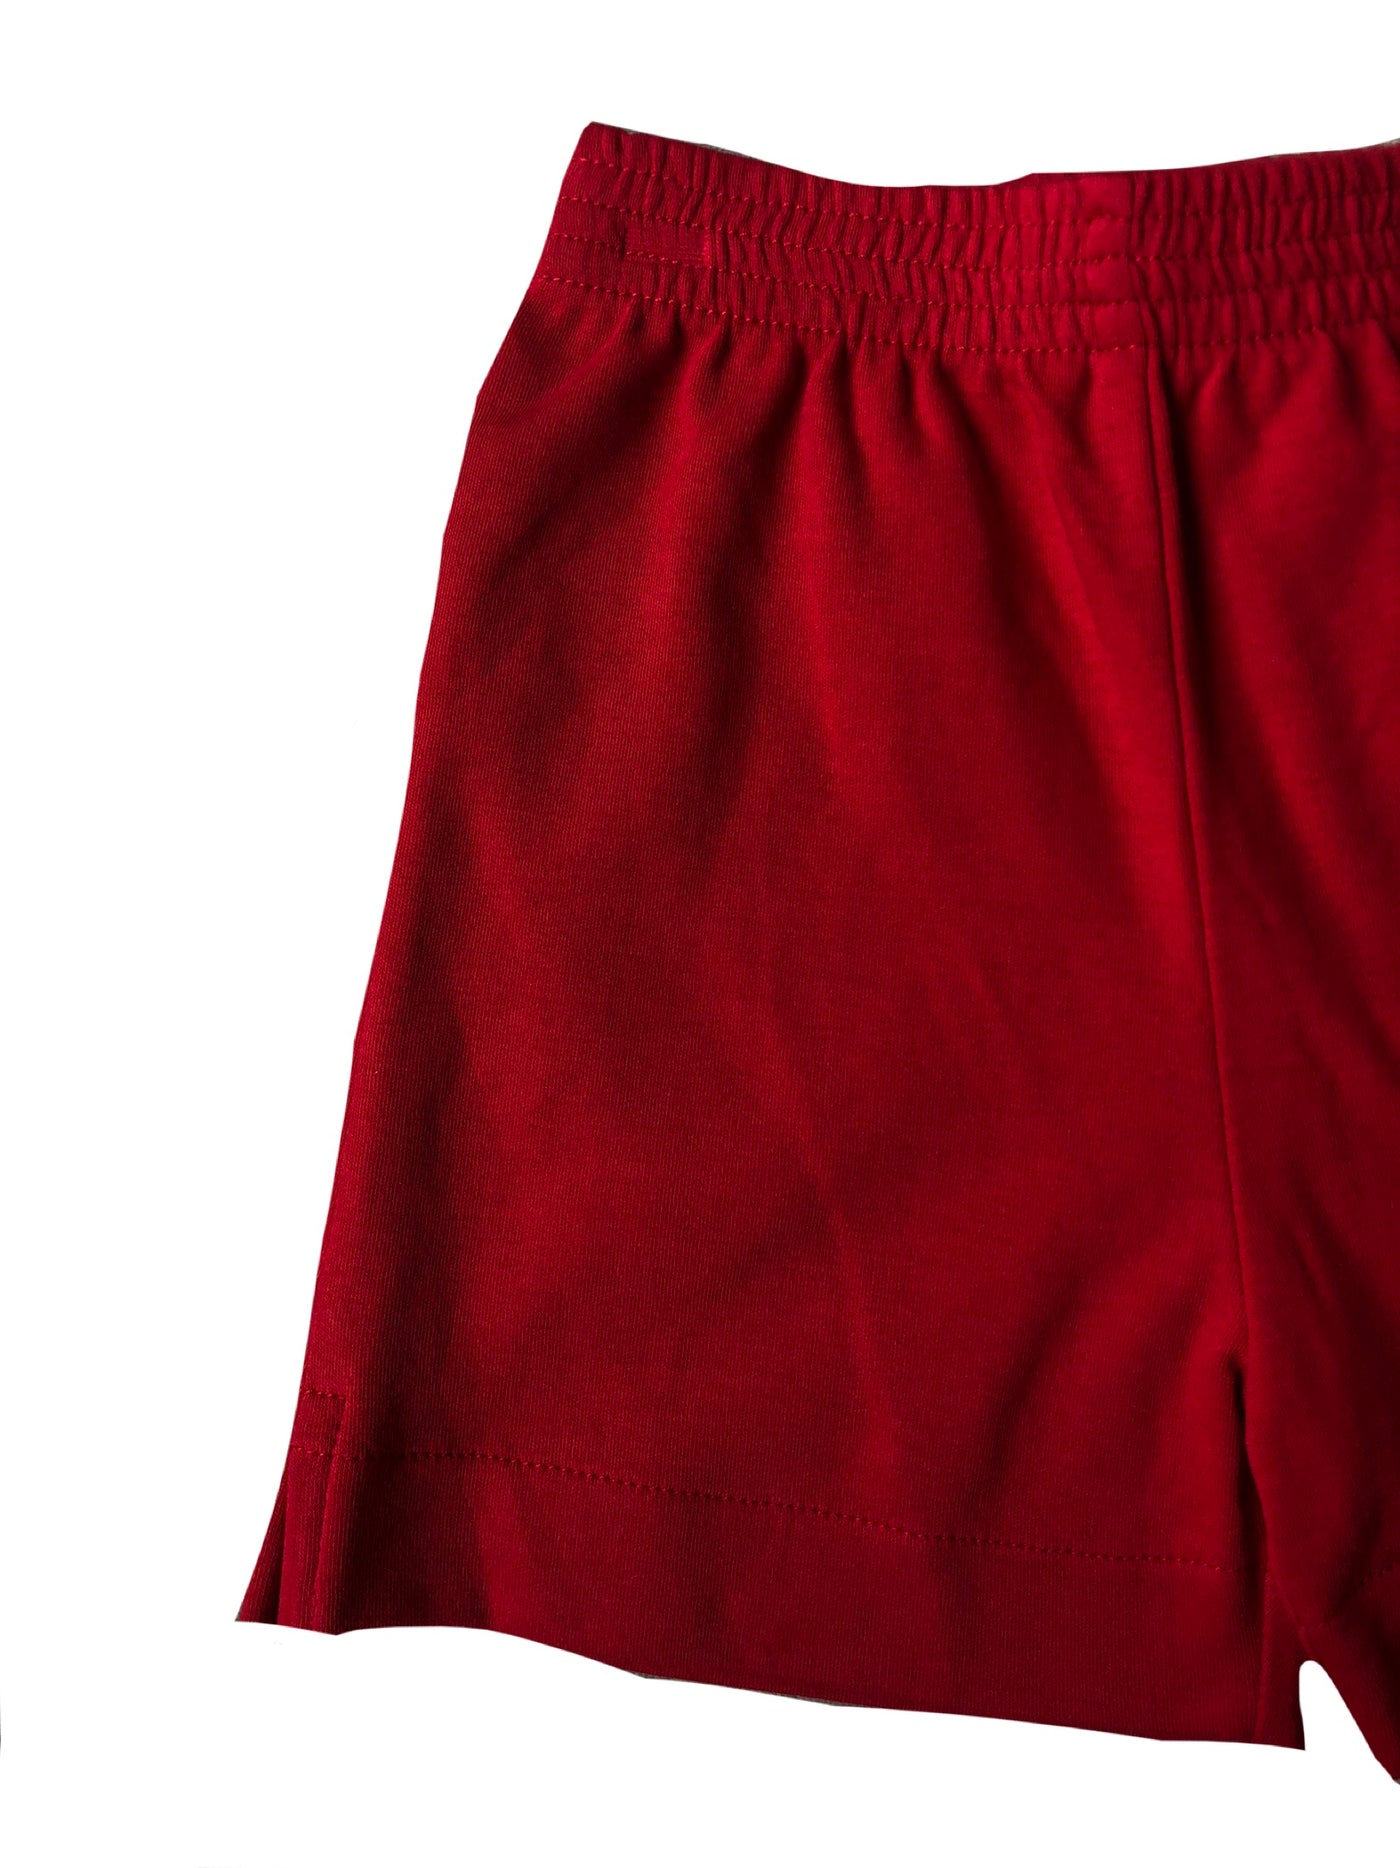 Deep Red Jersey Shorts